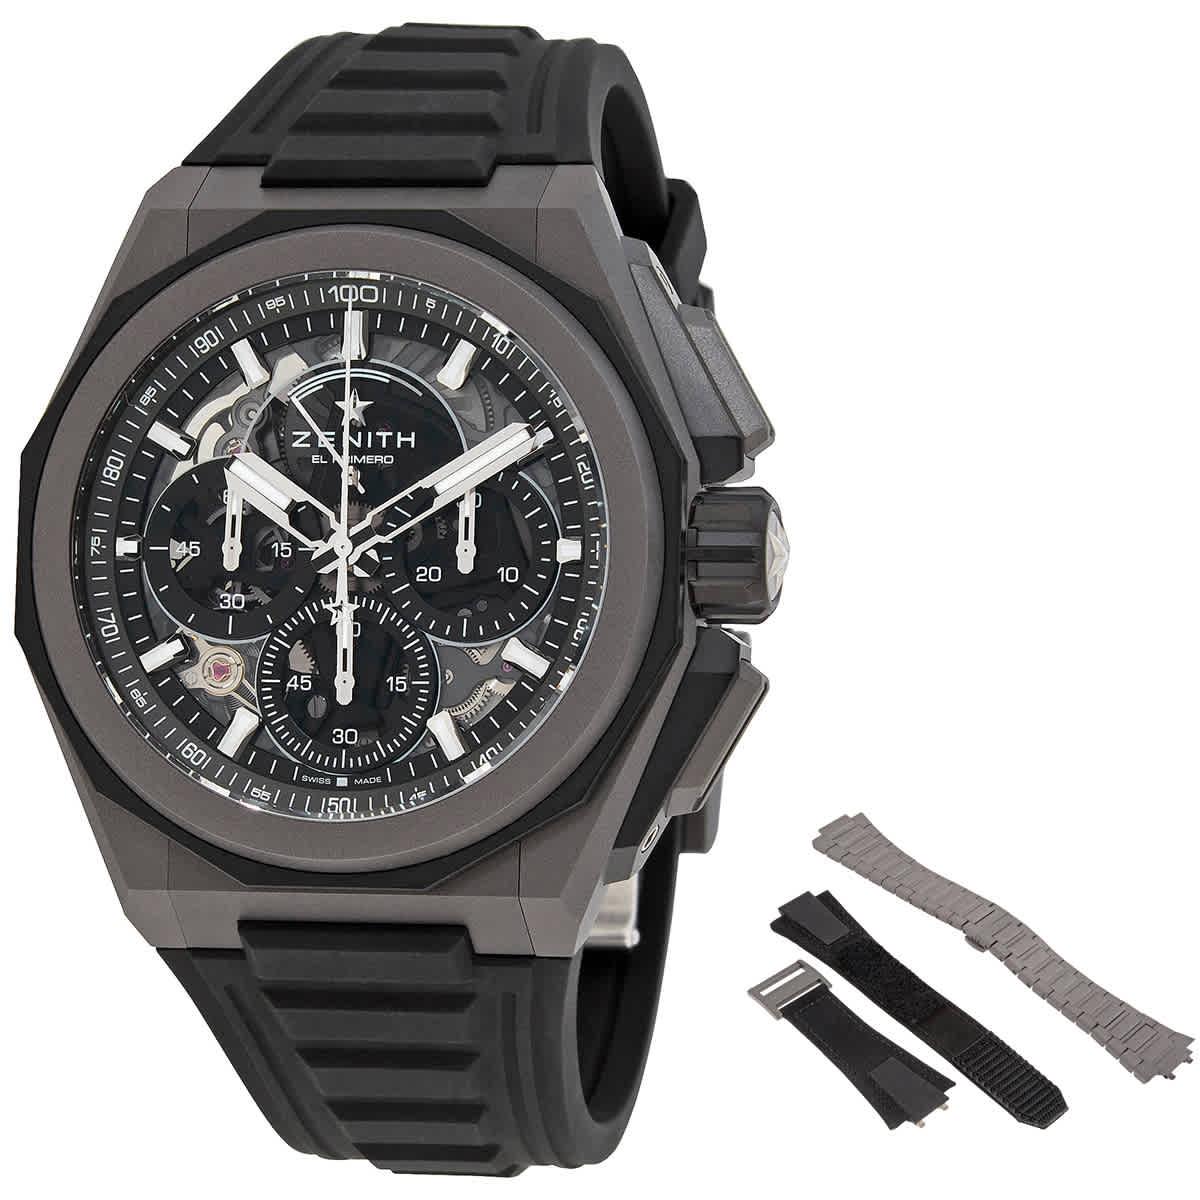 Zenith+Defy+Men%27s+Black+Watch+-+03.9300.3620%2F78.I001 for sale